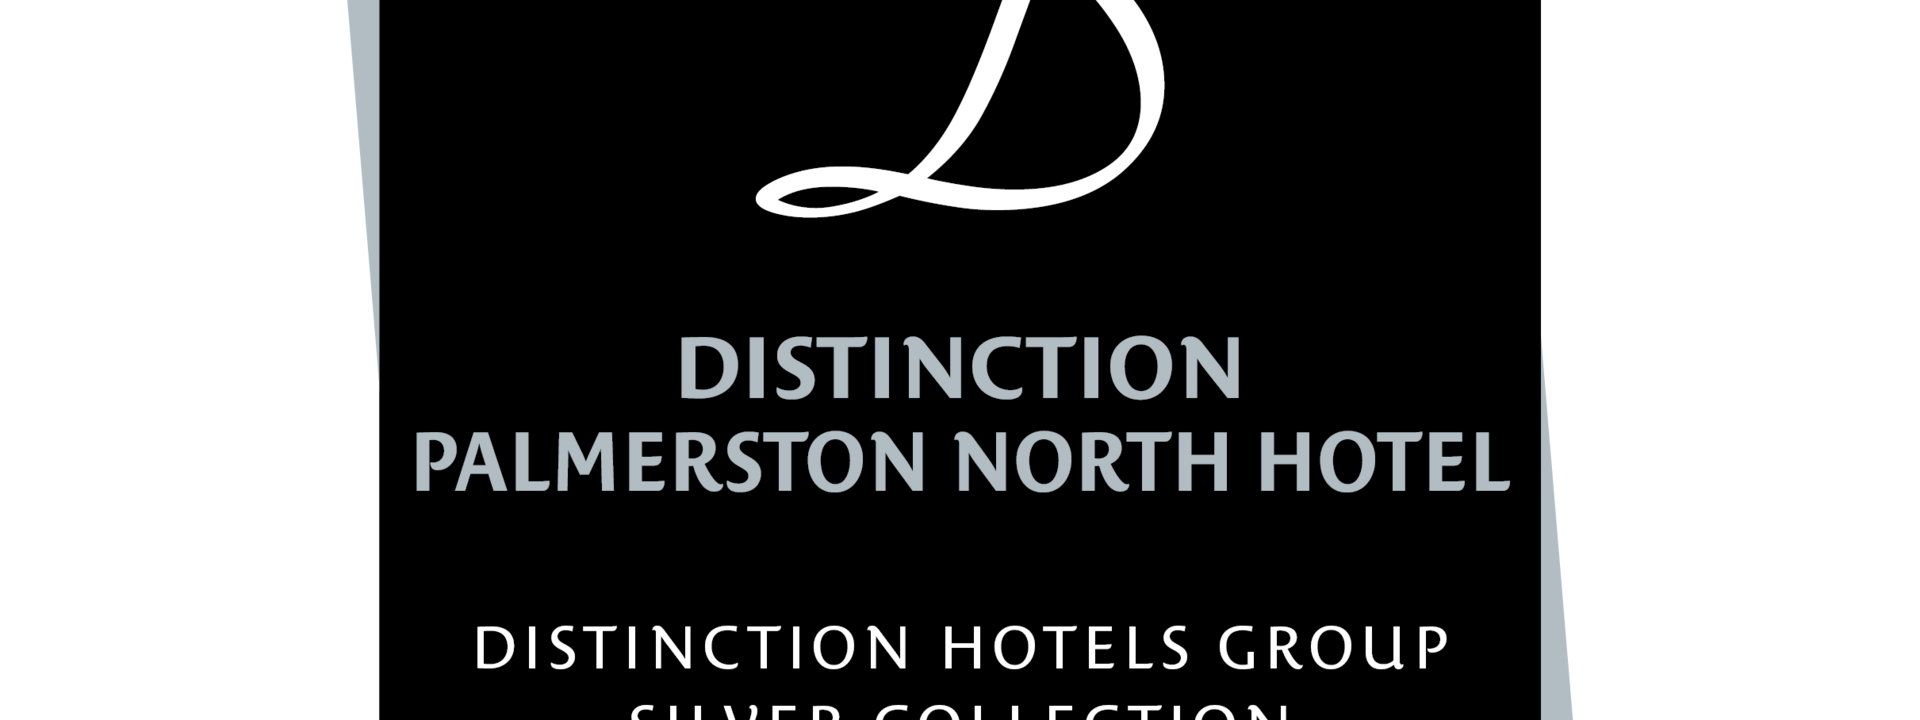 Distinction Palmerston North Hotel Logo4 PNG.png